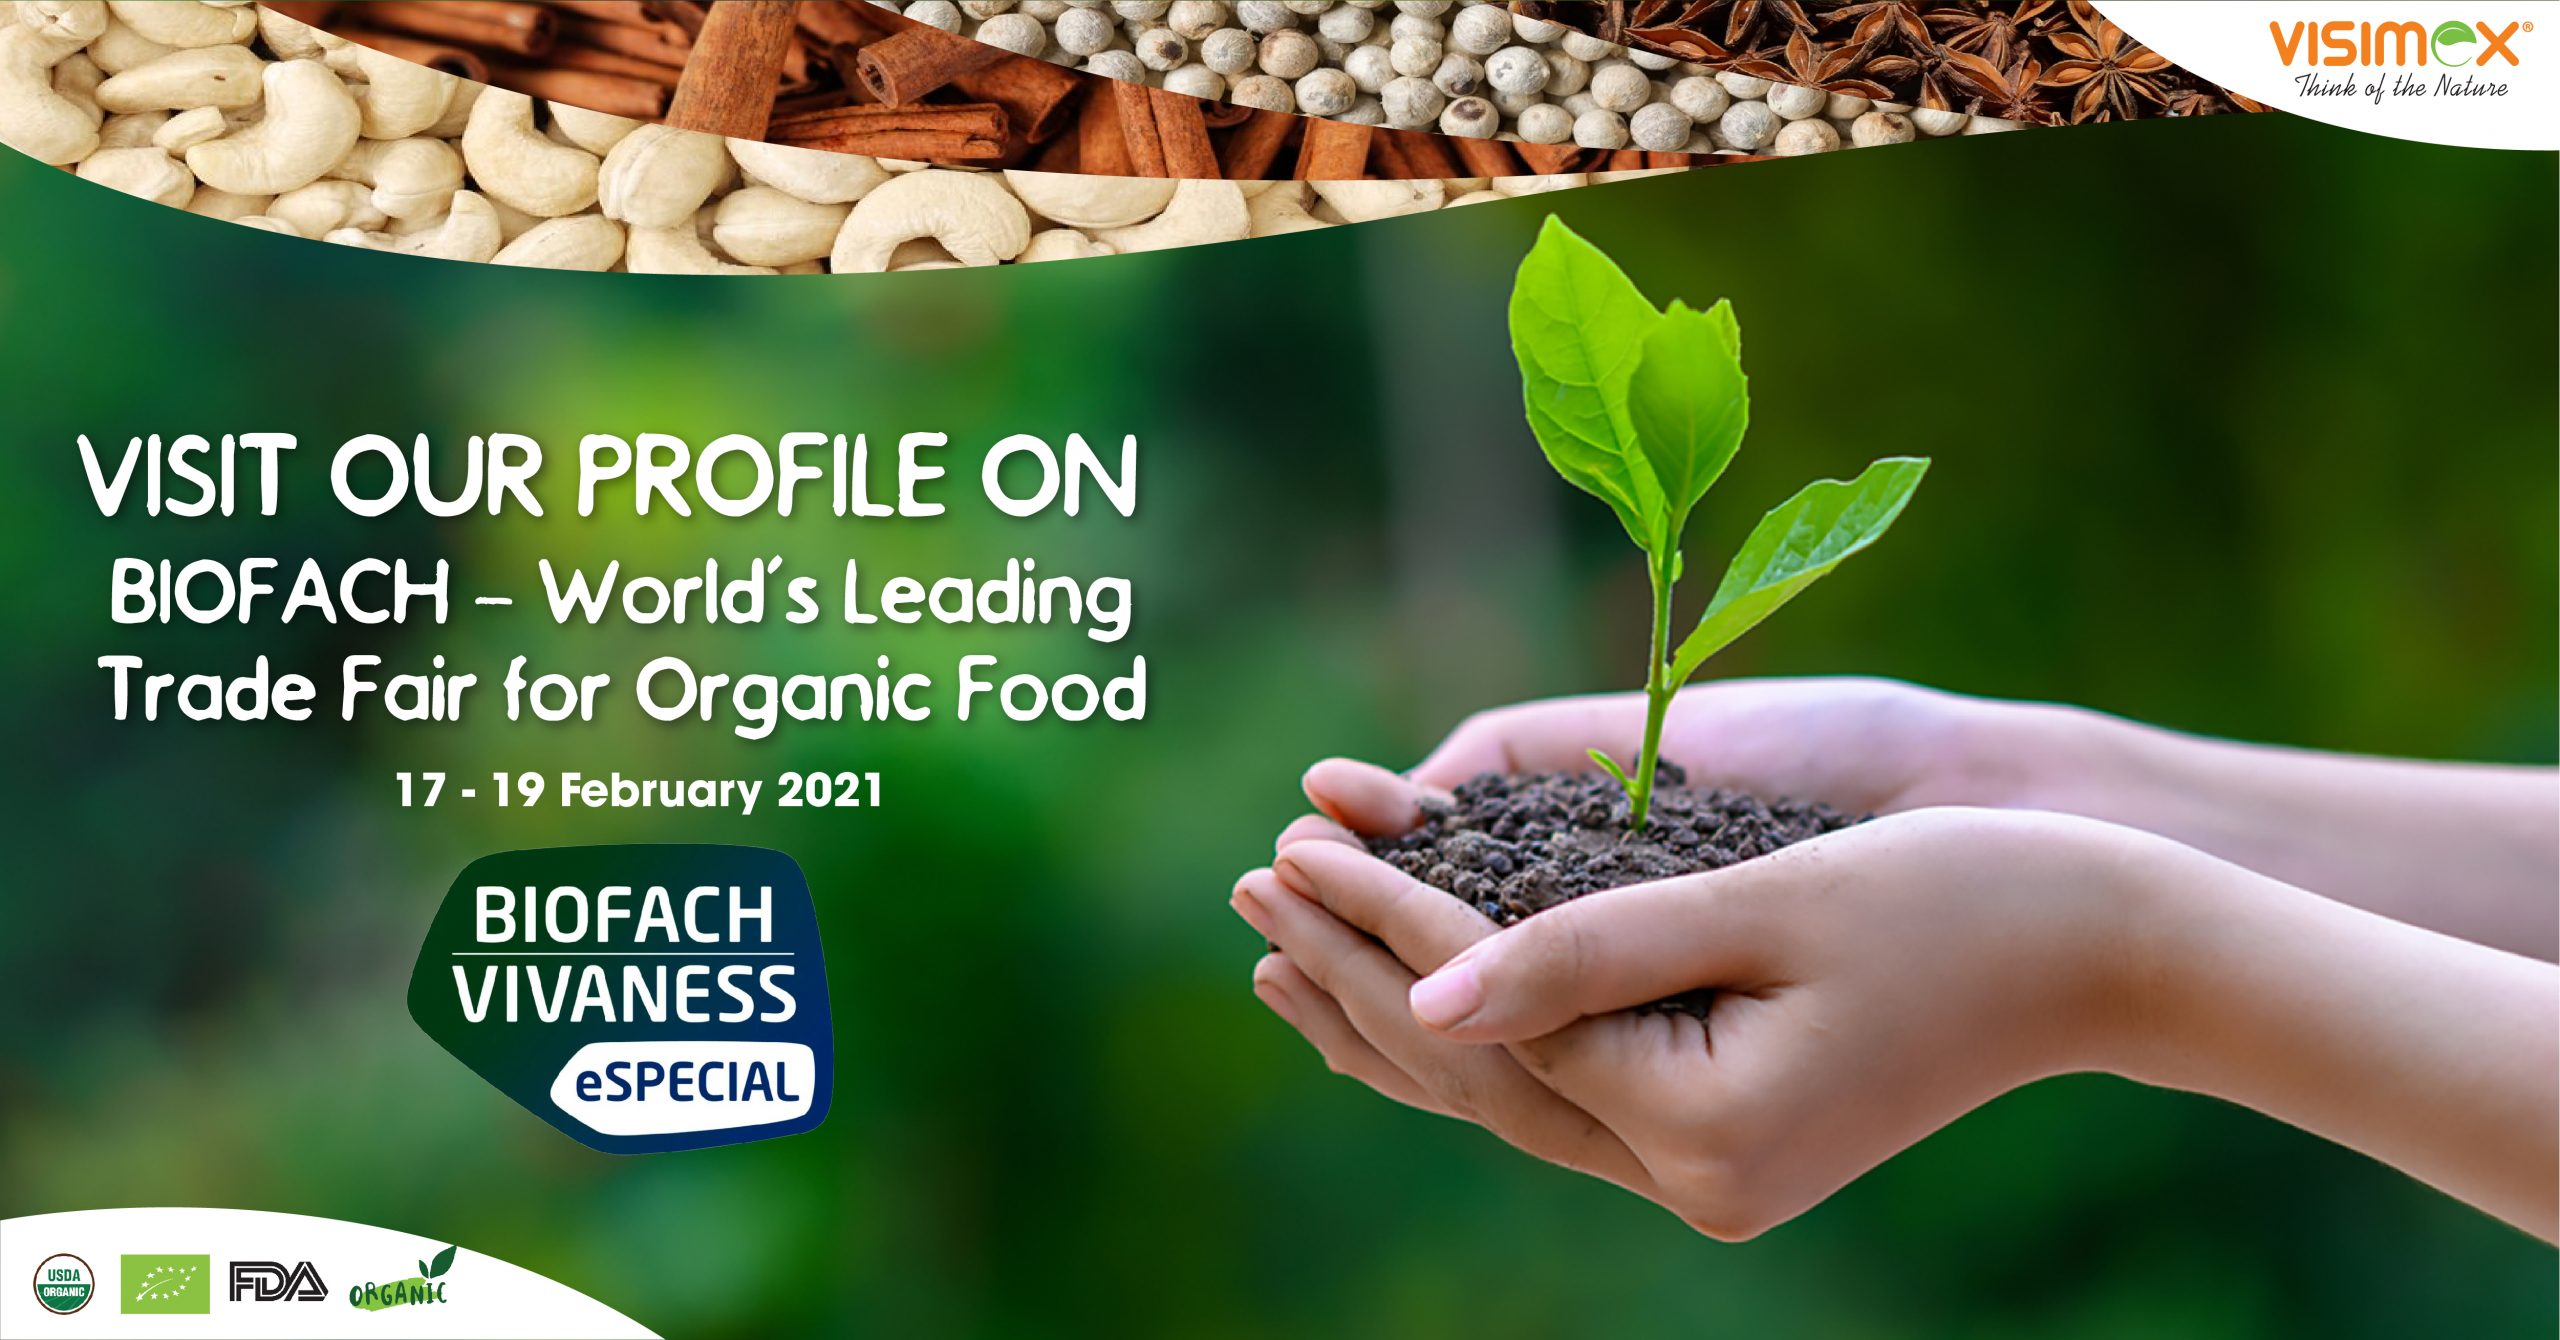 Visimex joins BIOFACH - World's Leading Trade Fair for Organic Food